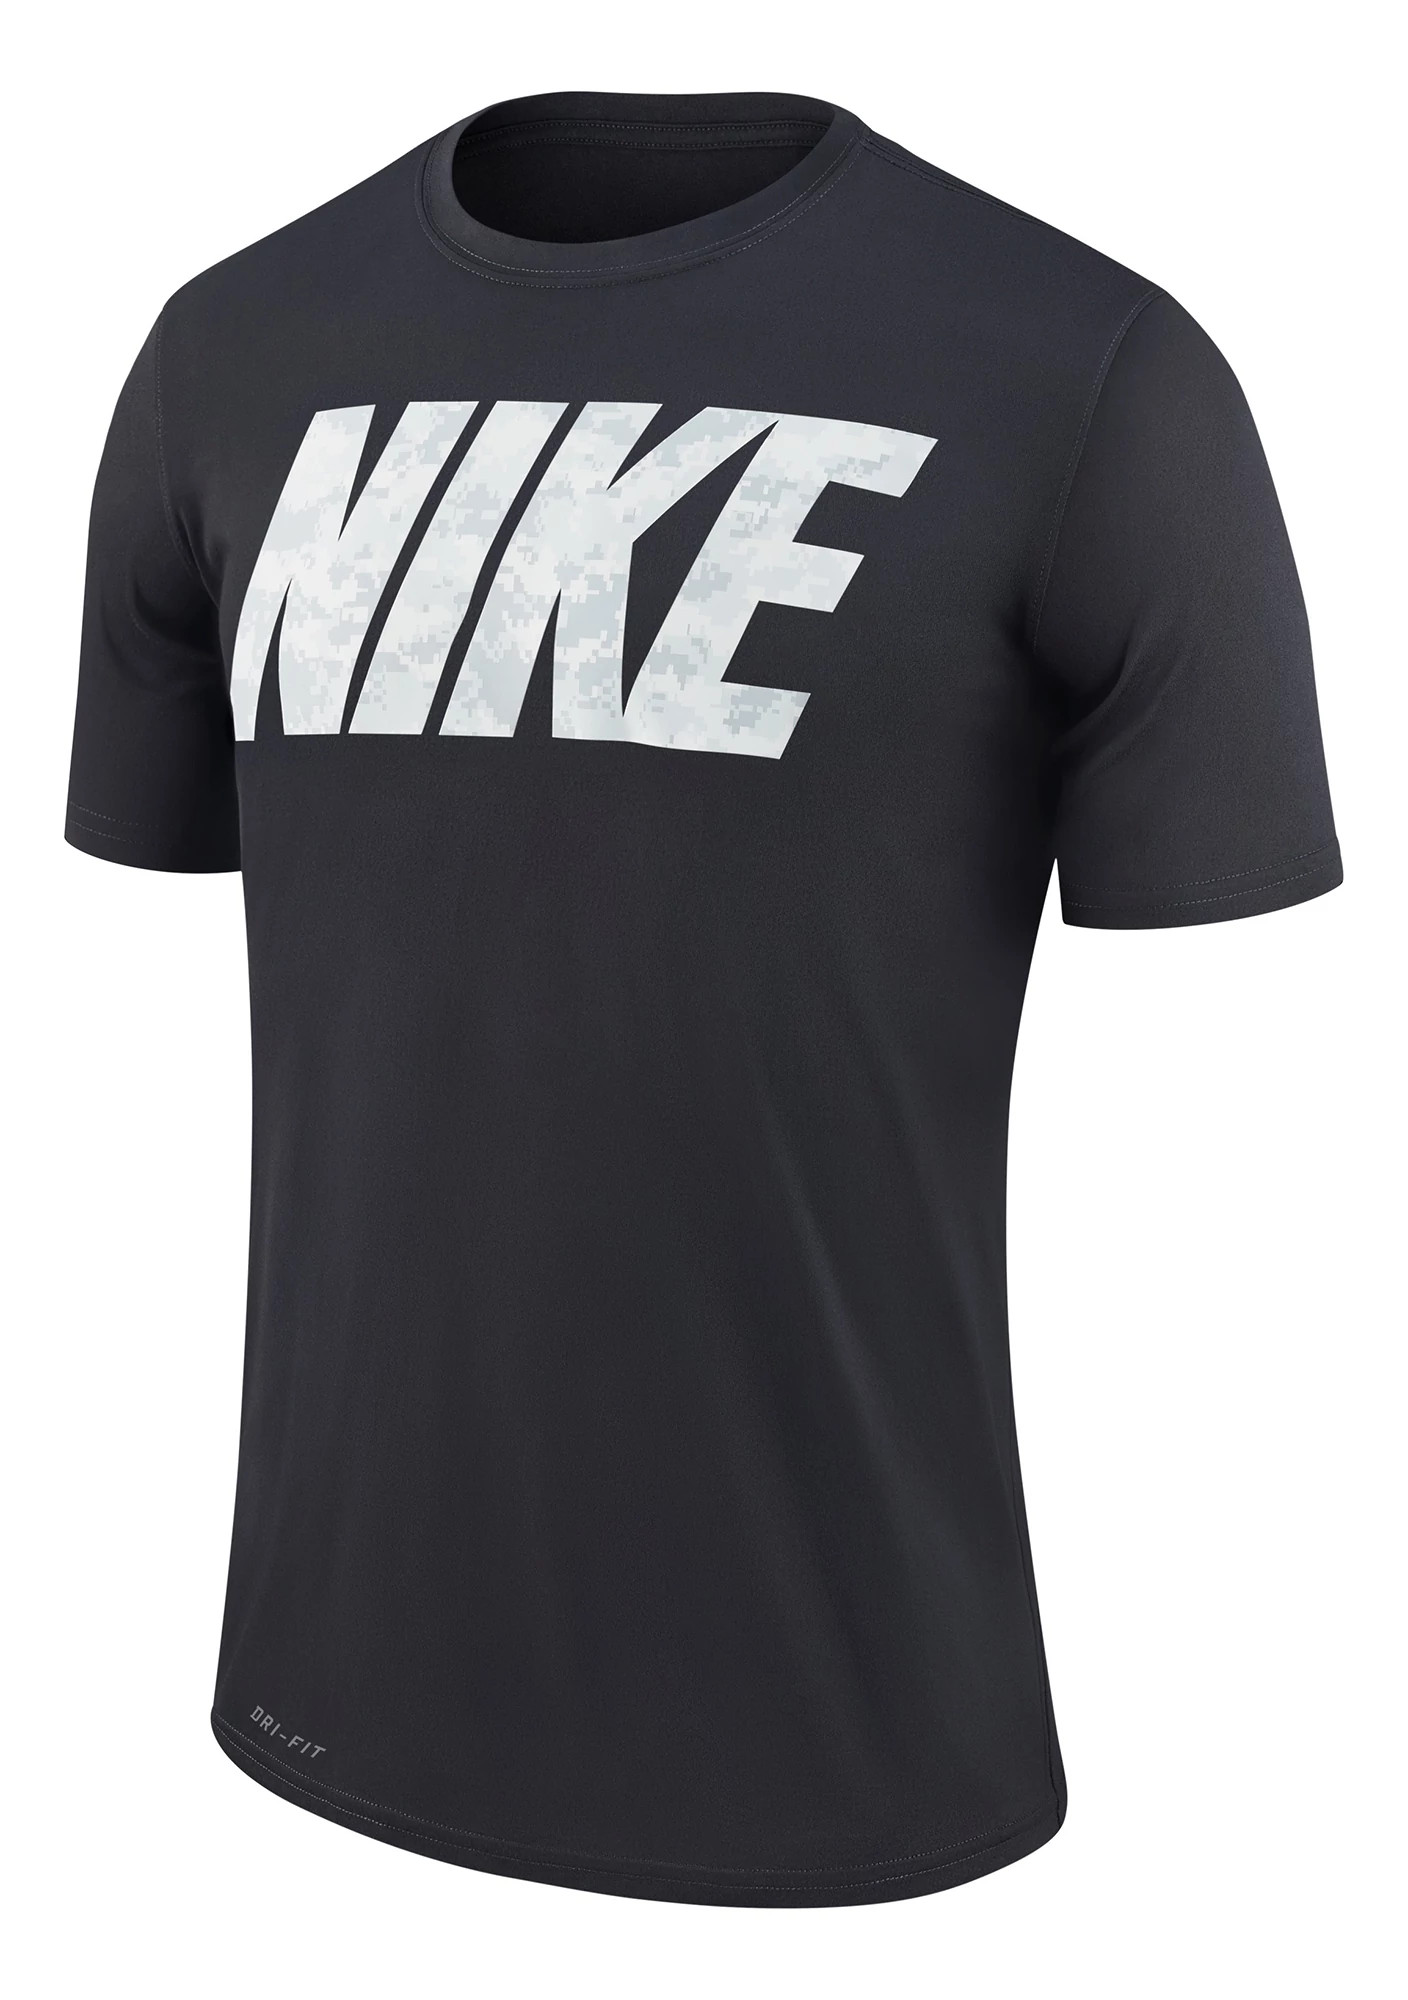 Mens Nike Metcon 3 Camo Shirt Technical Tops